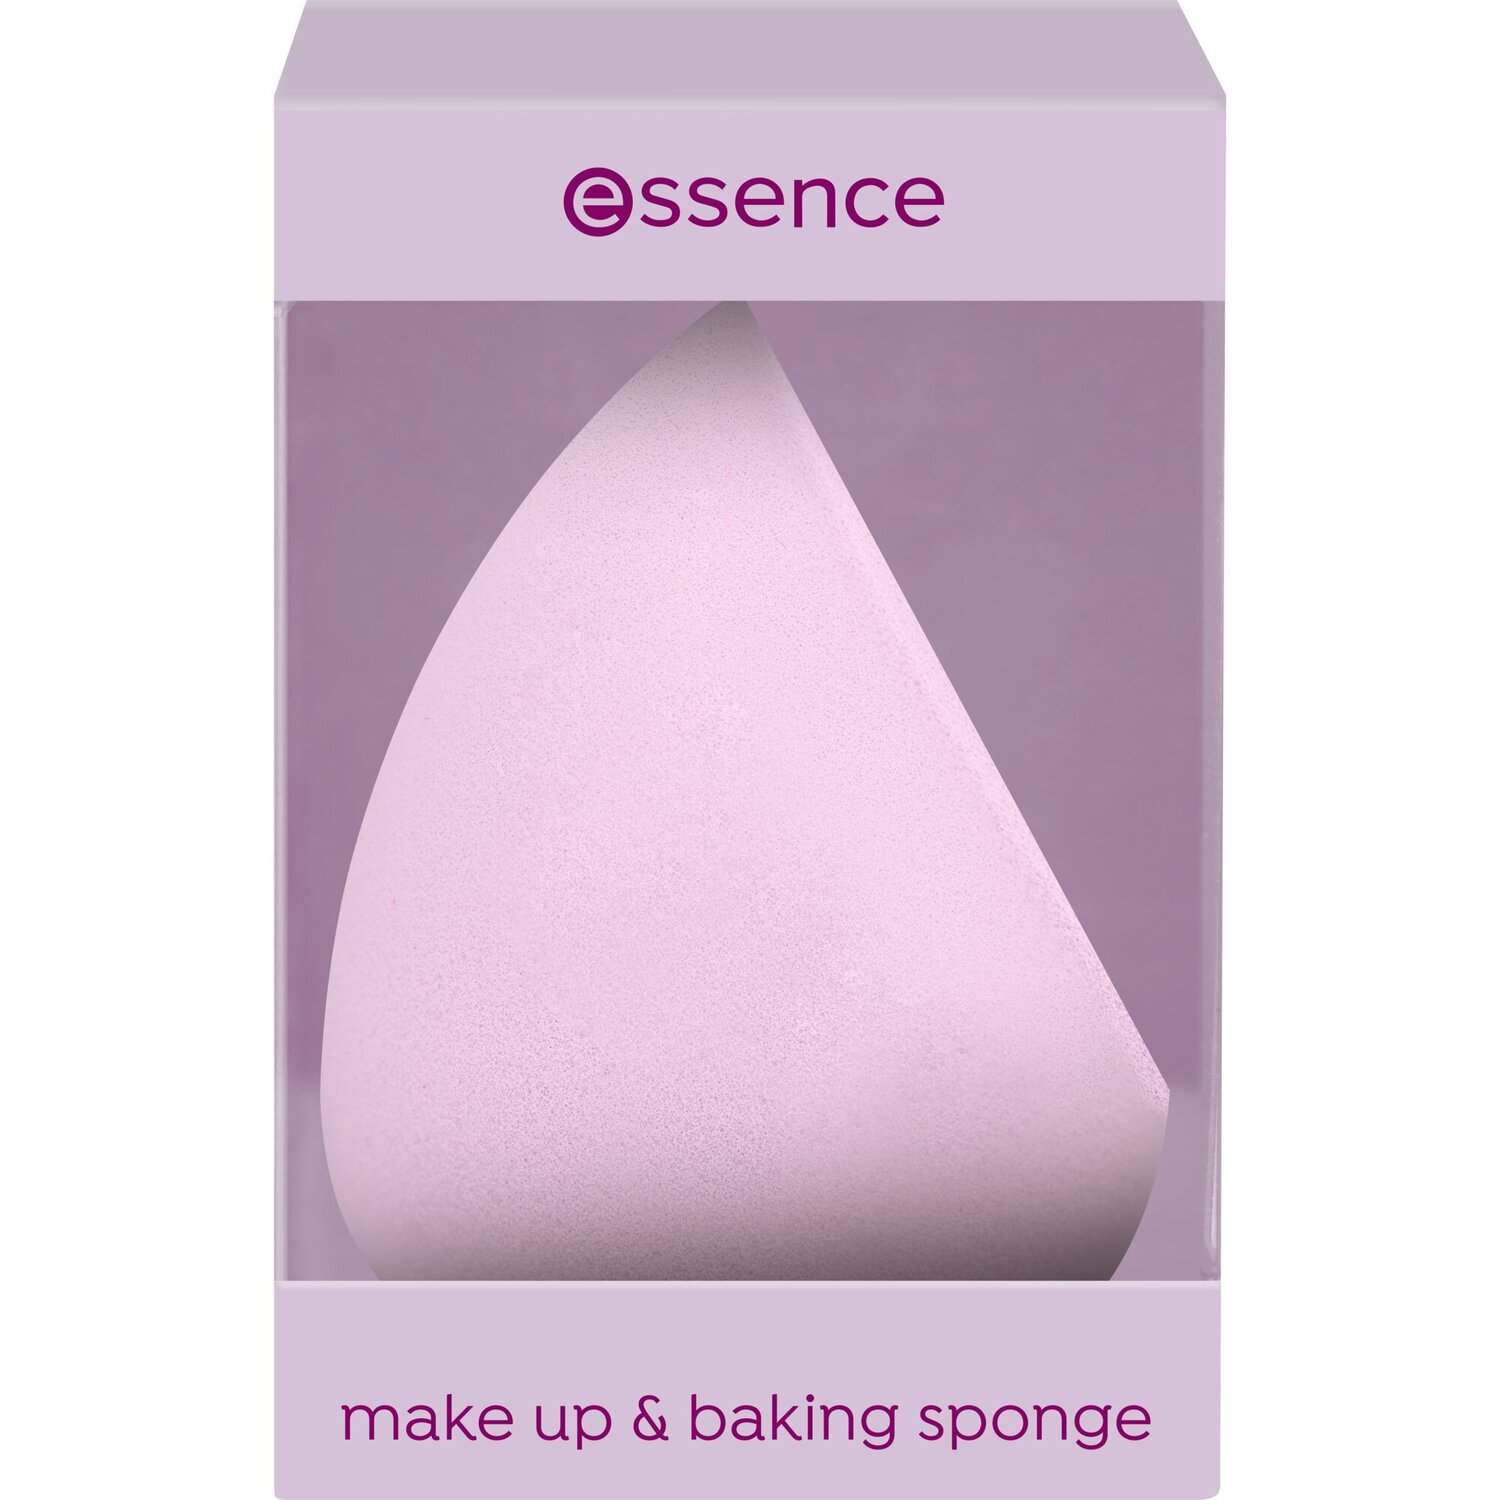 Essence Makeup & Baking Sponge - Pale Pink Image 1